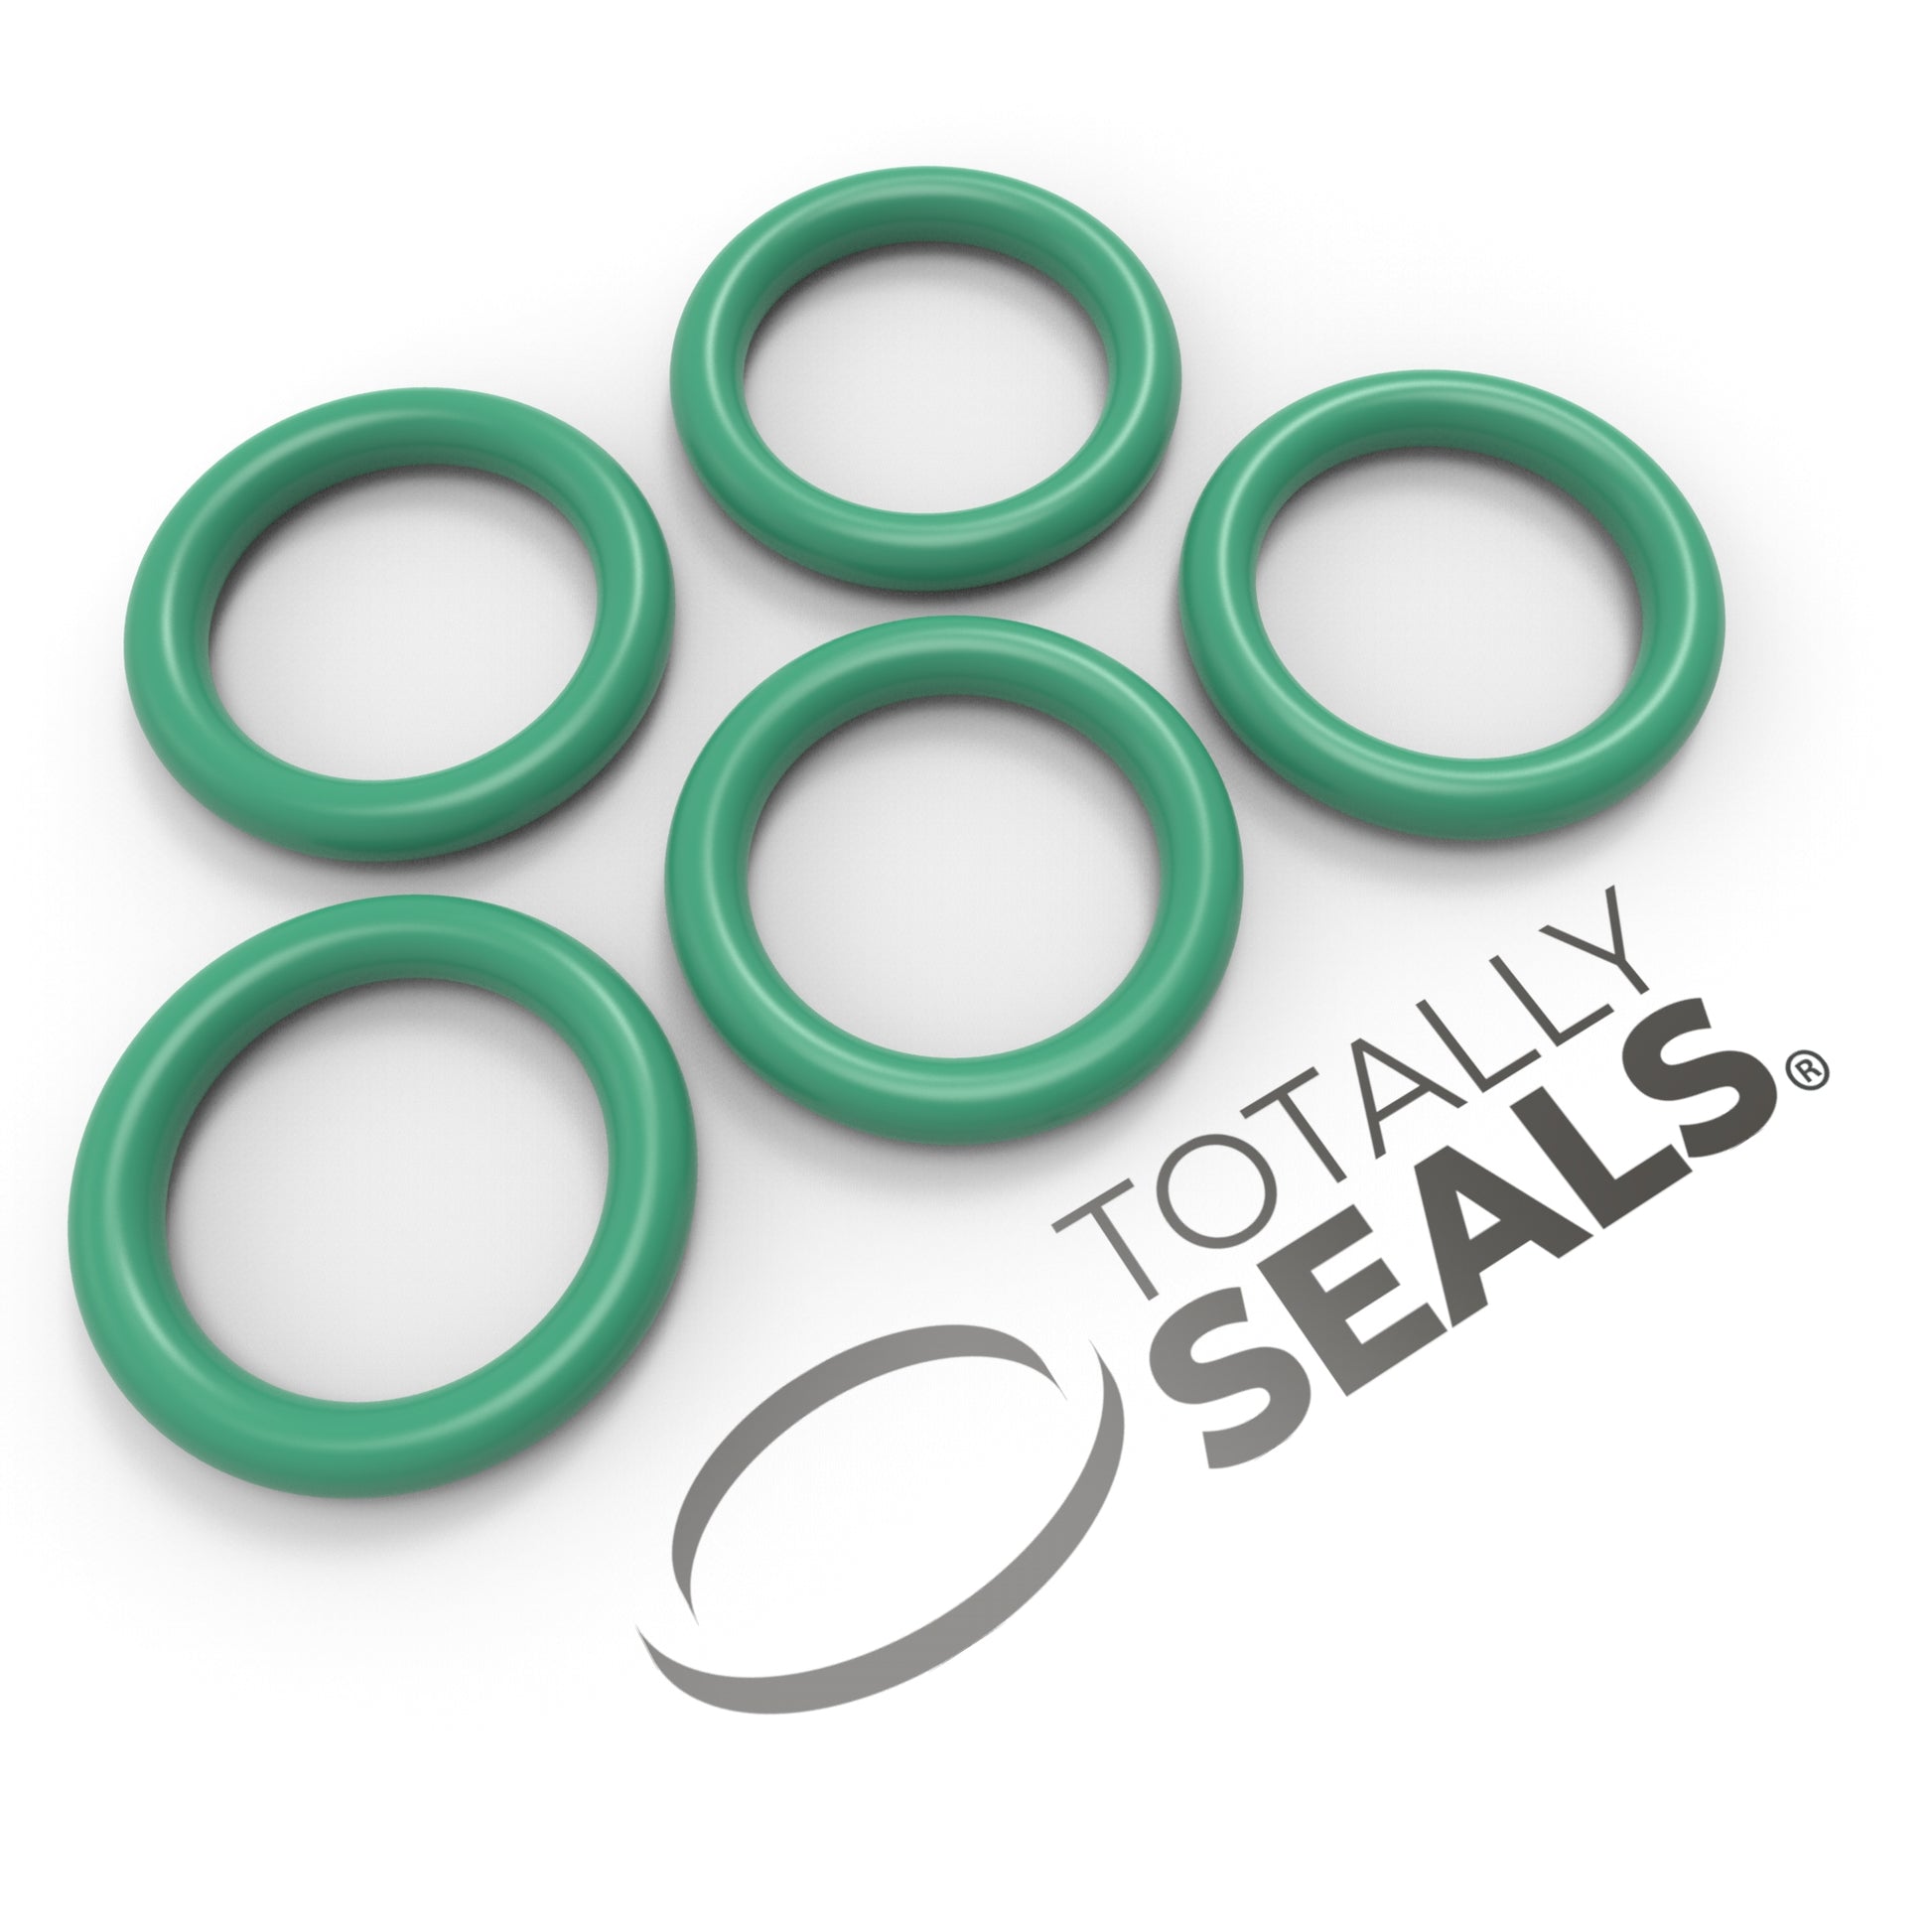 20mm x 2.5mm (25mm OD) FKM (Viton™) O-Rings - Totally Seals®